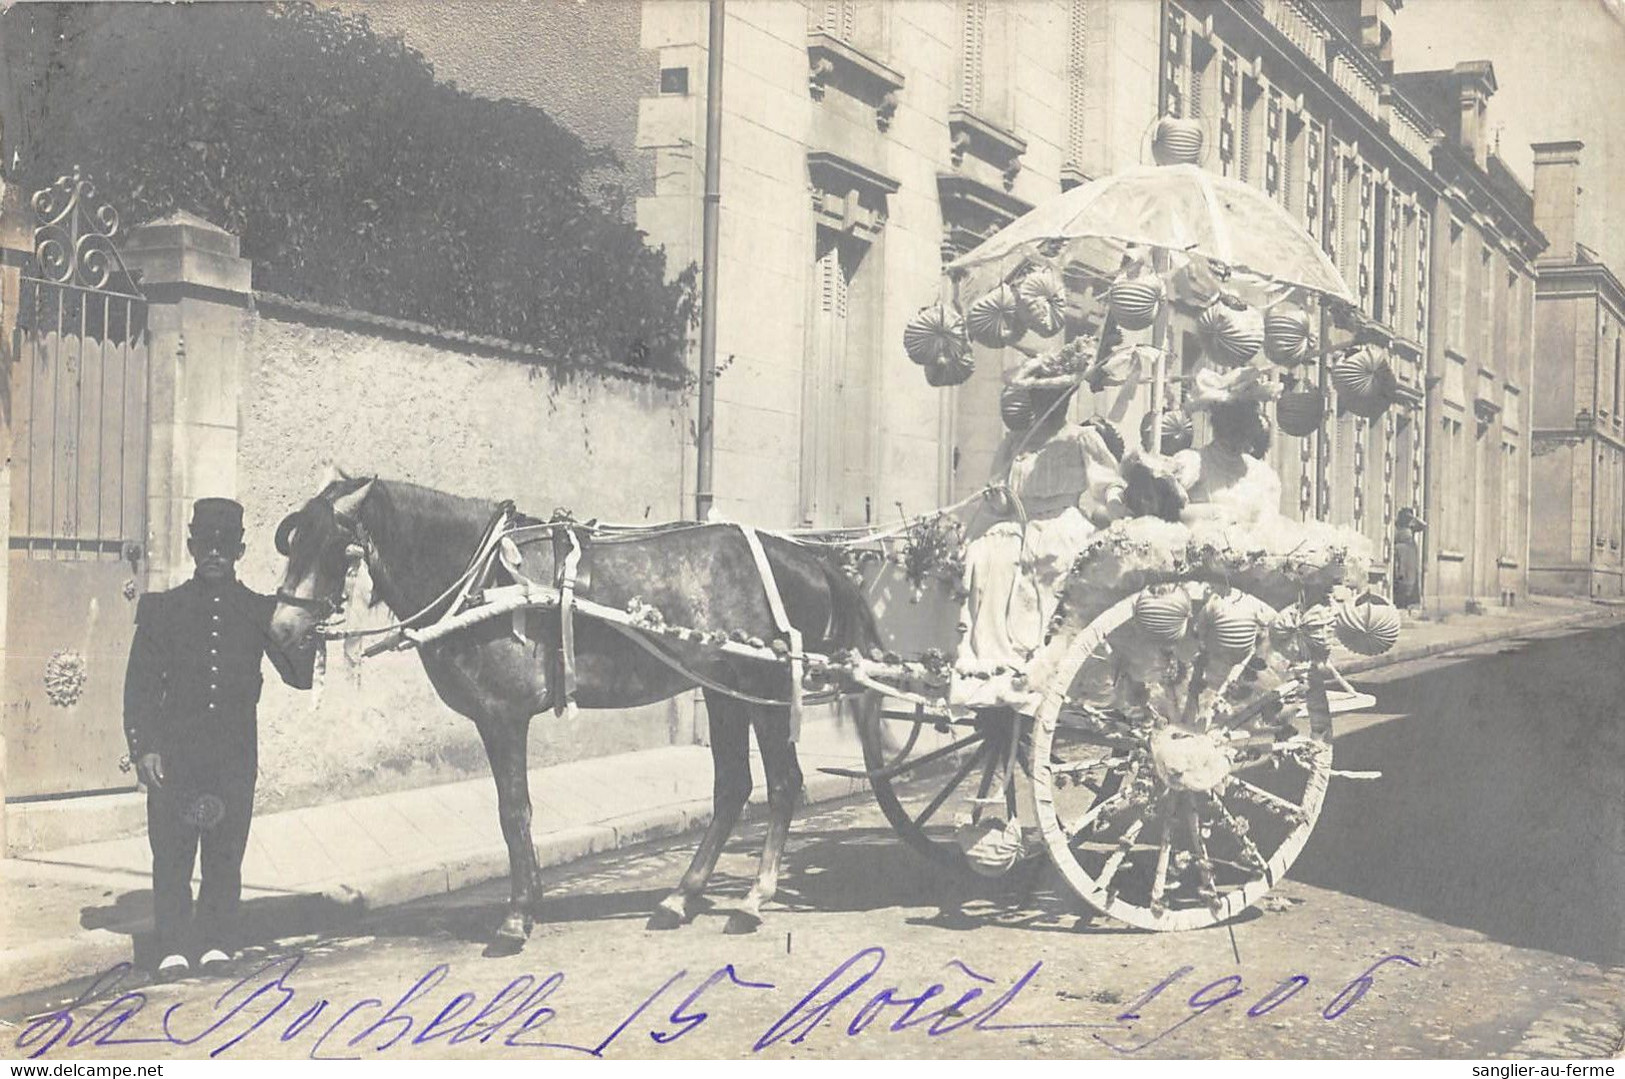 CPA 17 LA ROCHELLE  CARTE PHOTO   LE 15 AOUT 1906 - La Rochelle